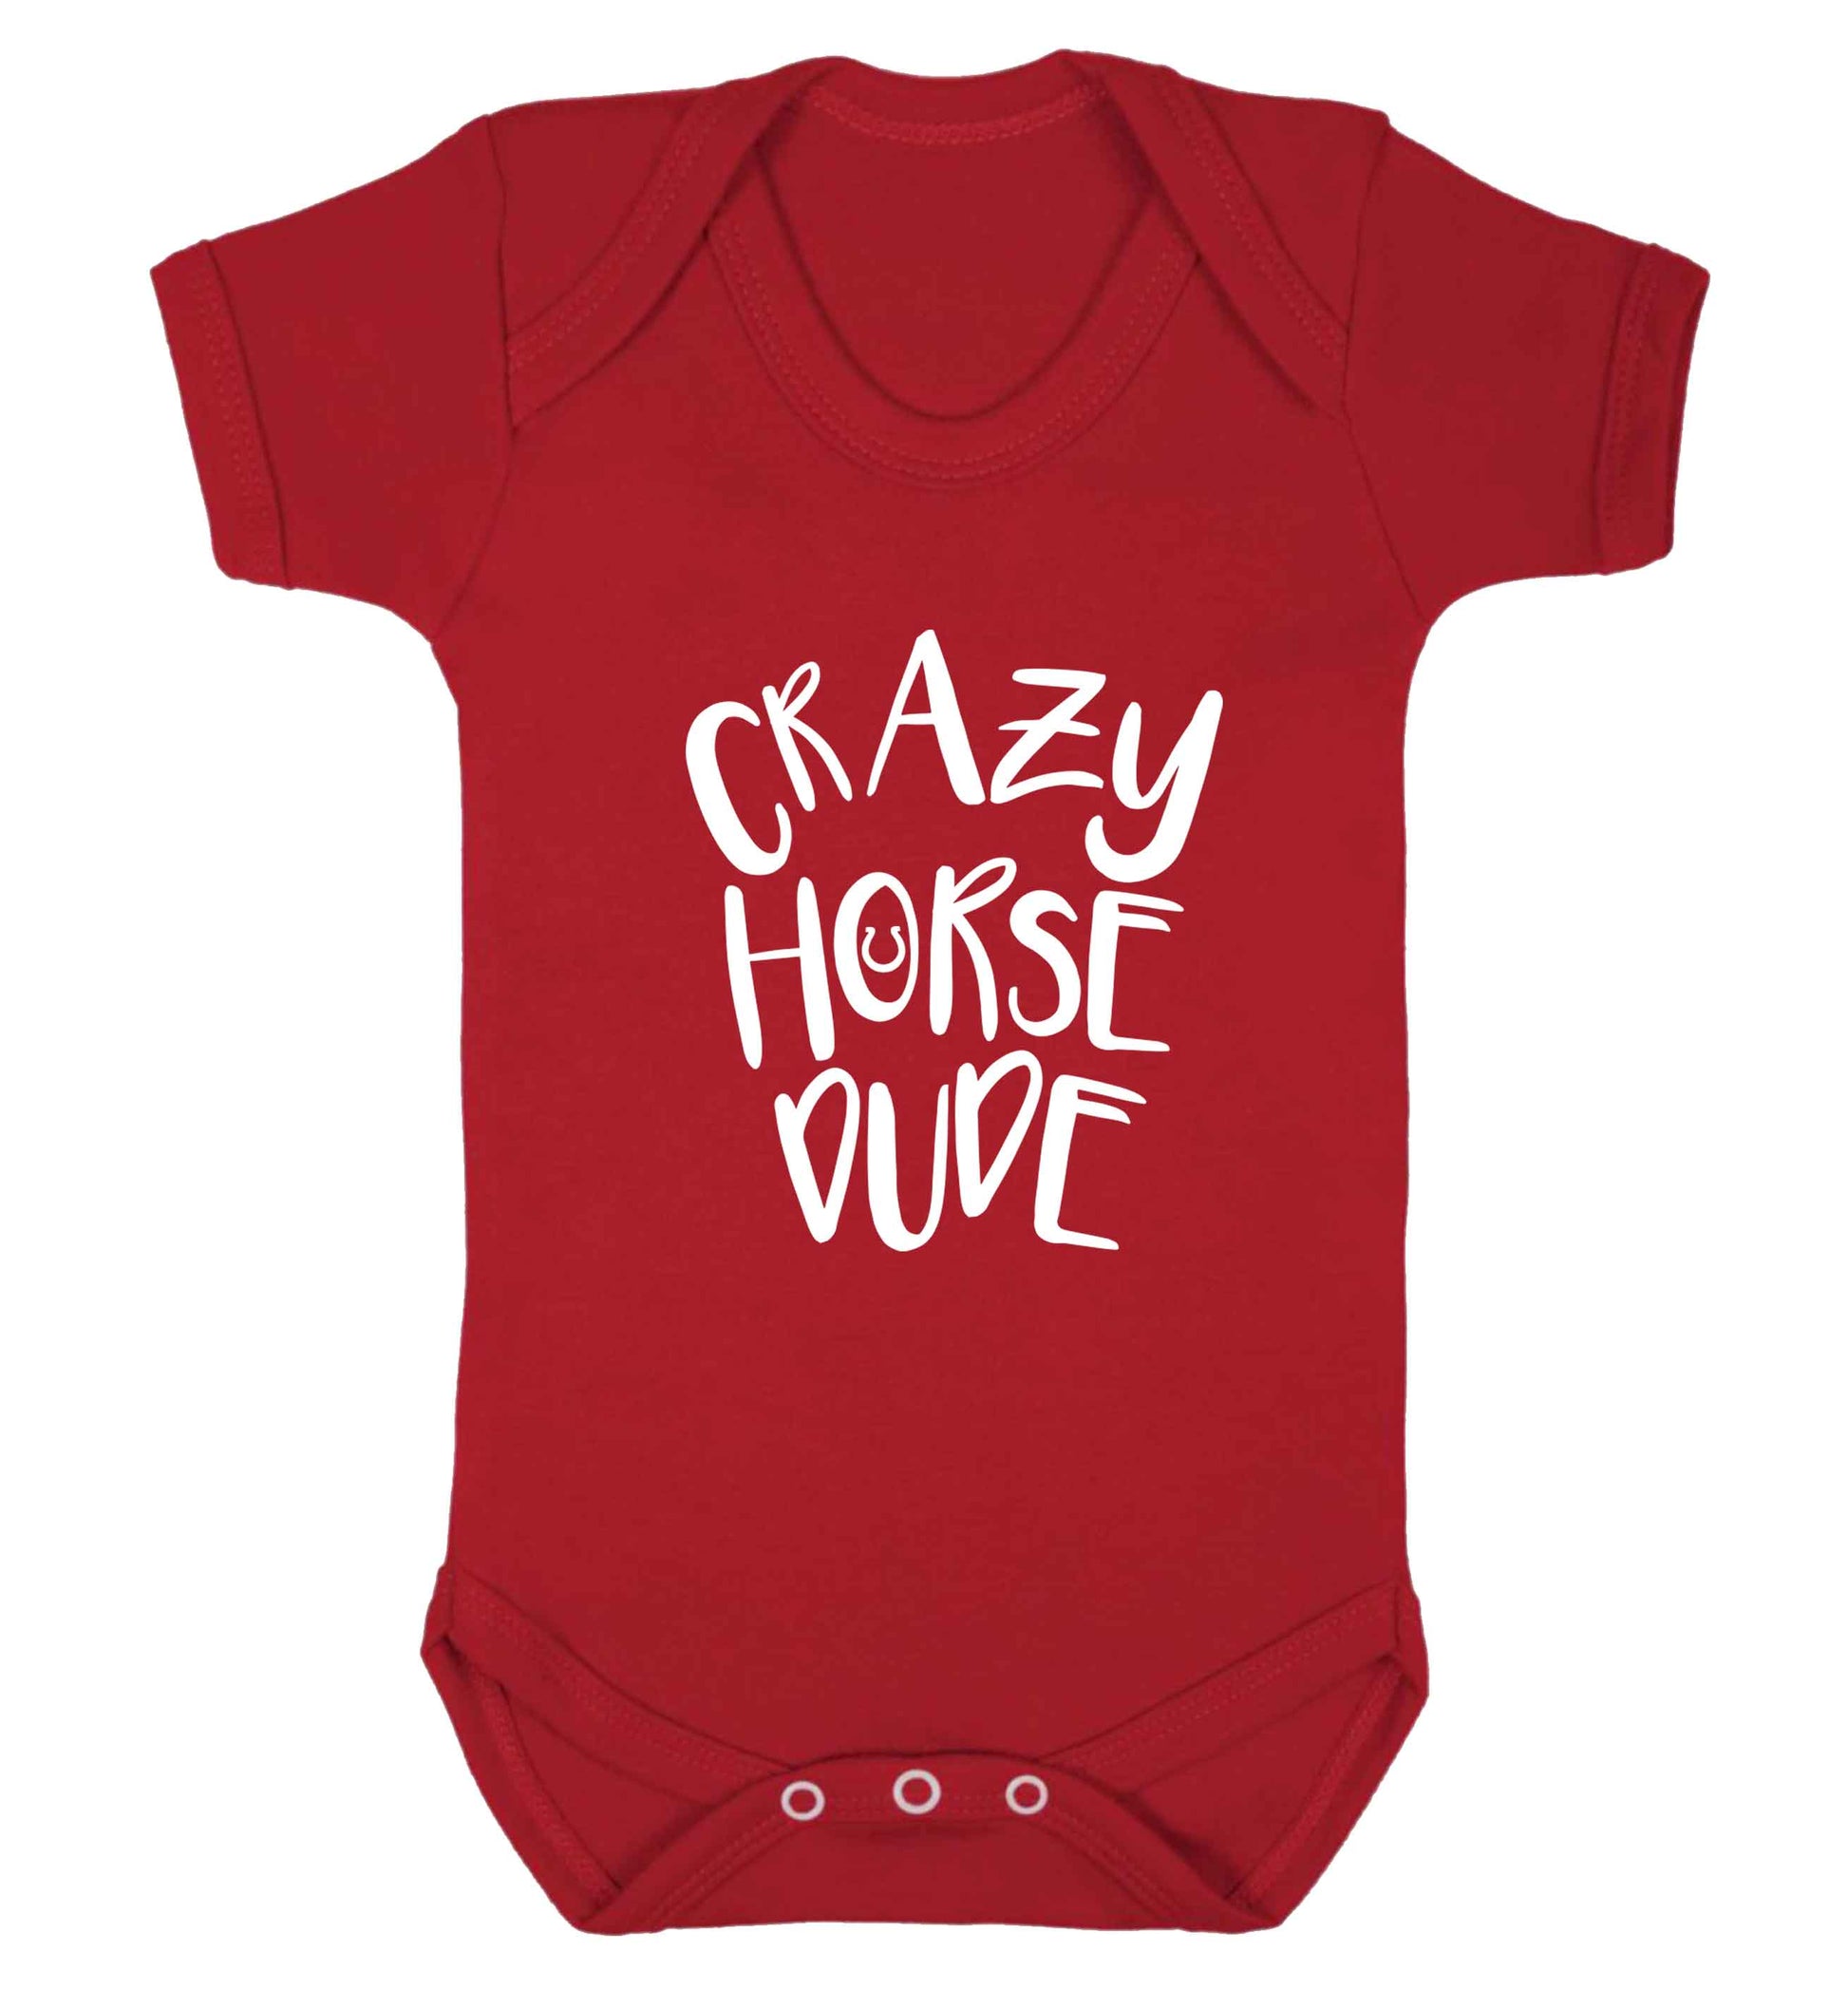 Crazy horse dude baby vest red 18-24 months